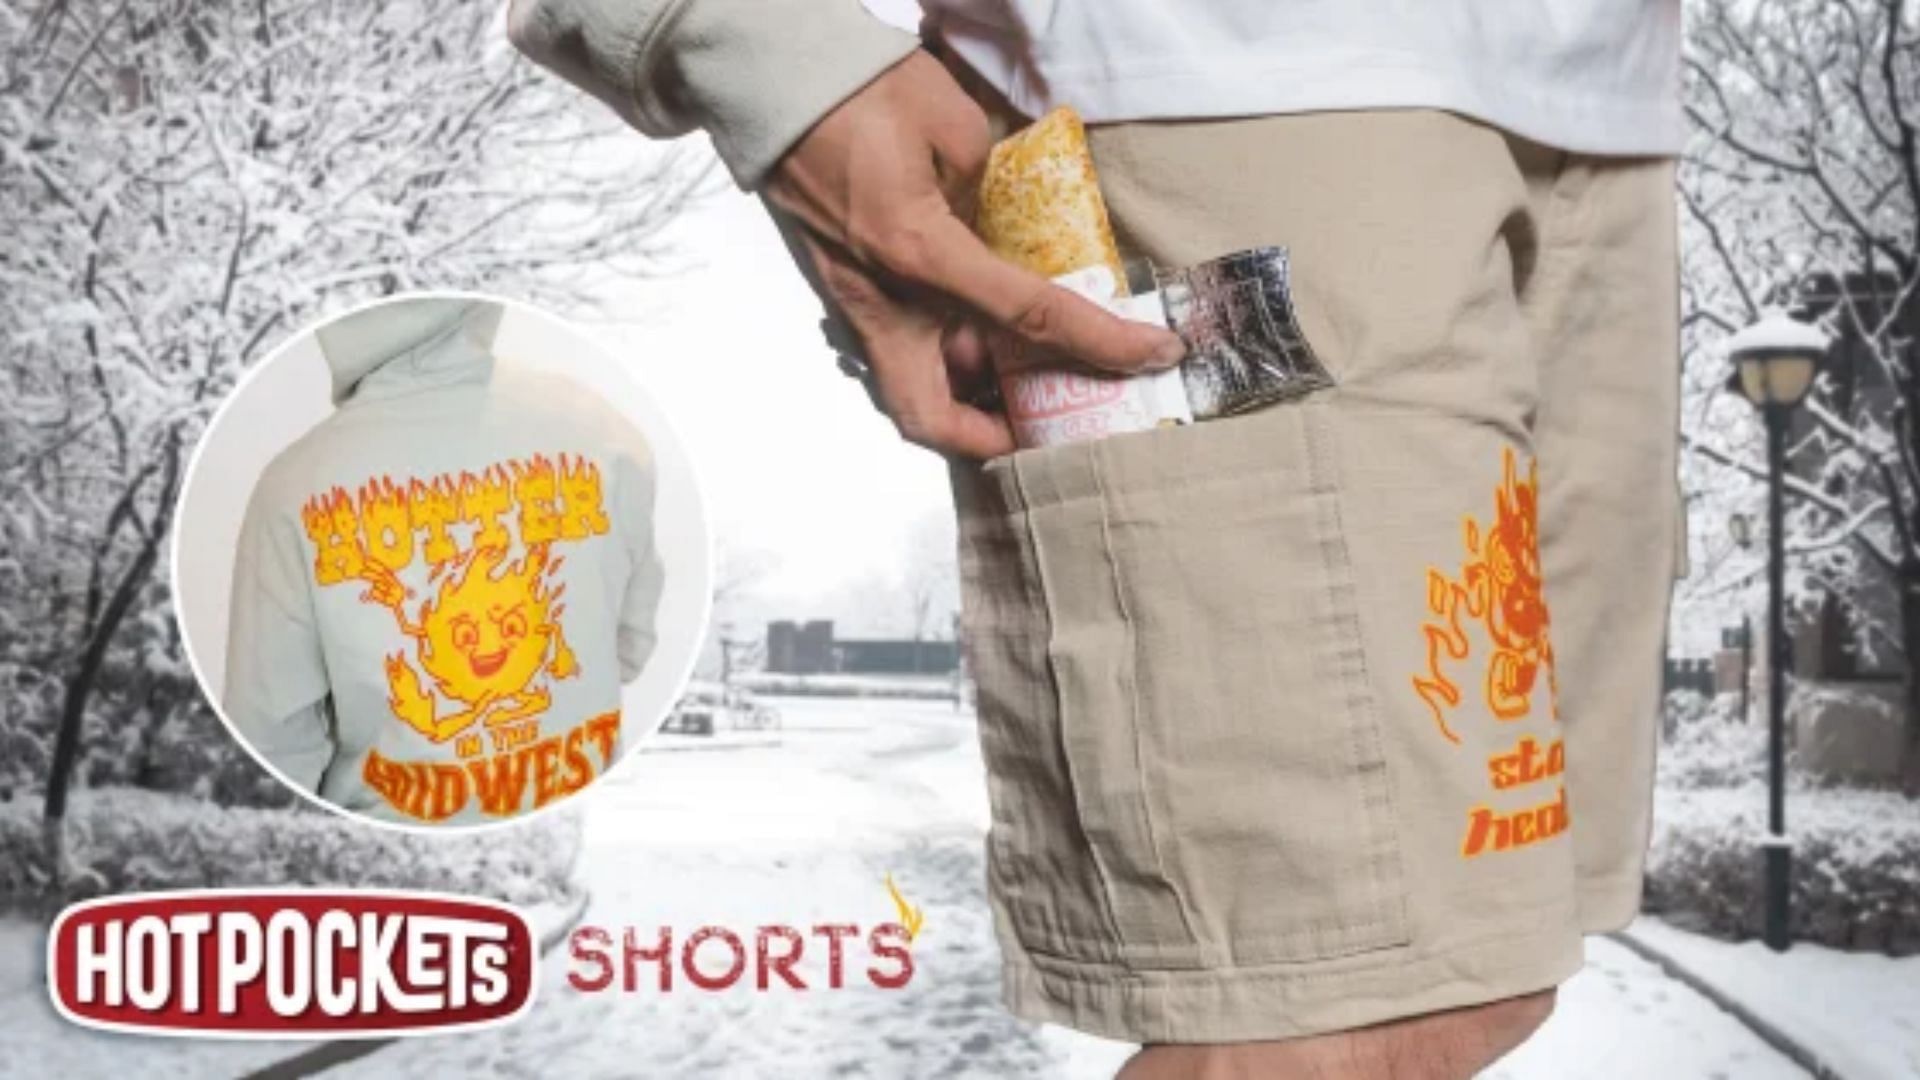 Wrap your warm Hot Pockets in Hot Pockets Shorts (Image via Hot Pockets)